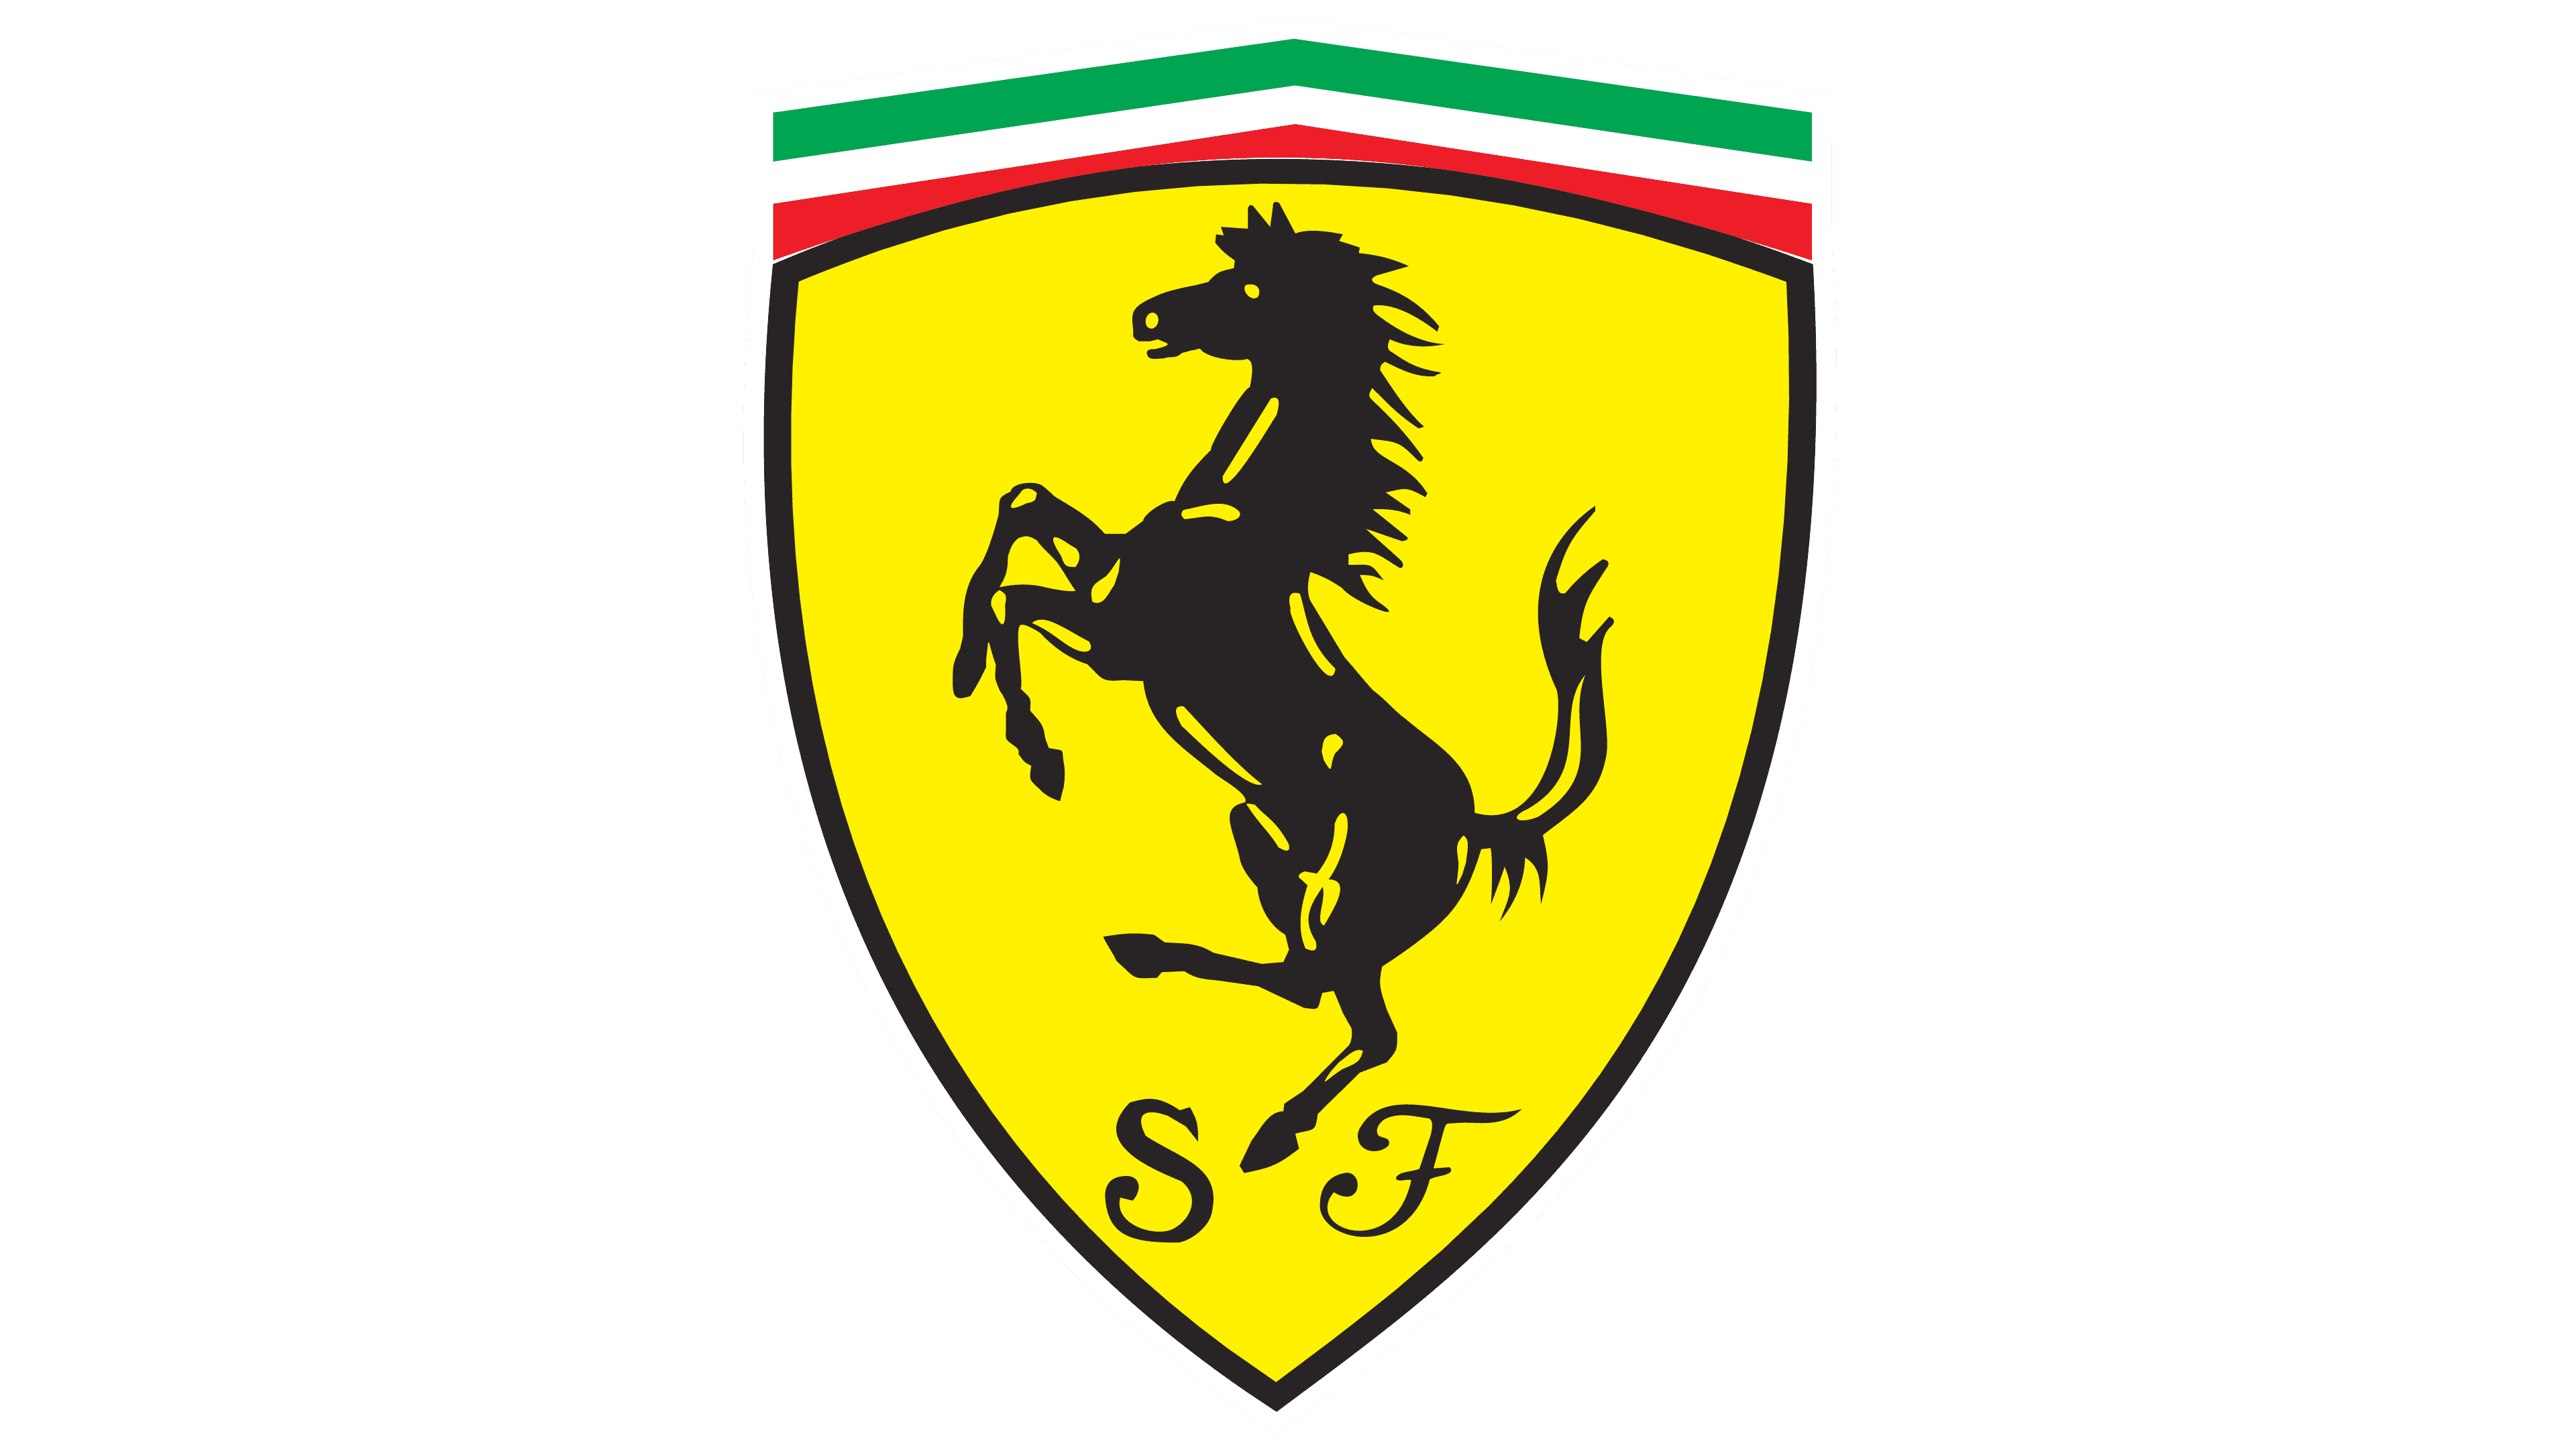 Download Ferrari Car Logo Png Brand Image Hq Png Image Freepngimg - Riset